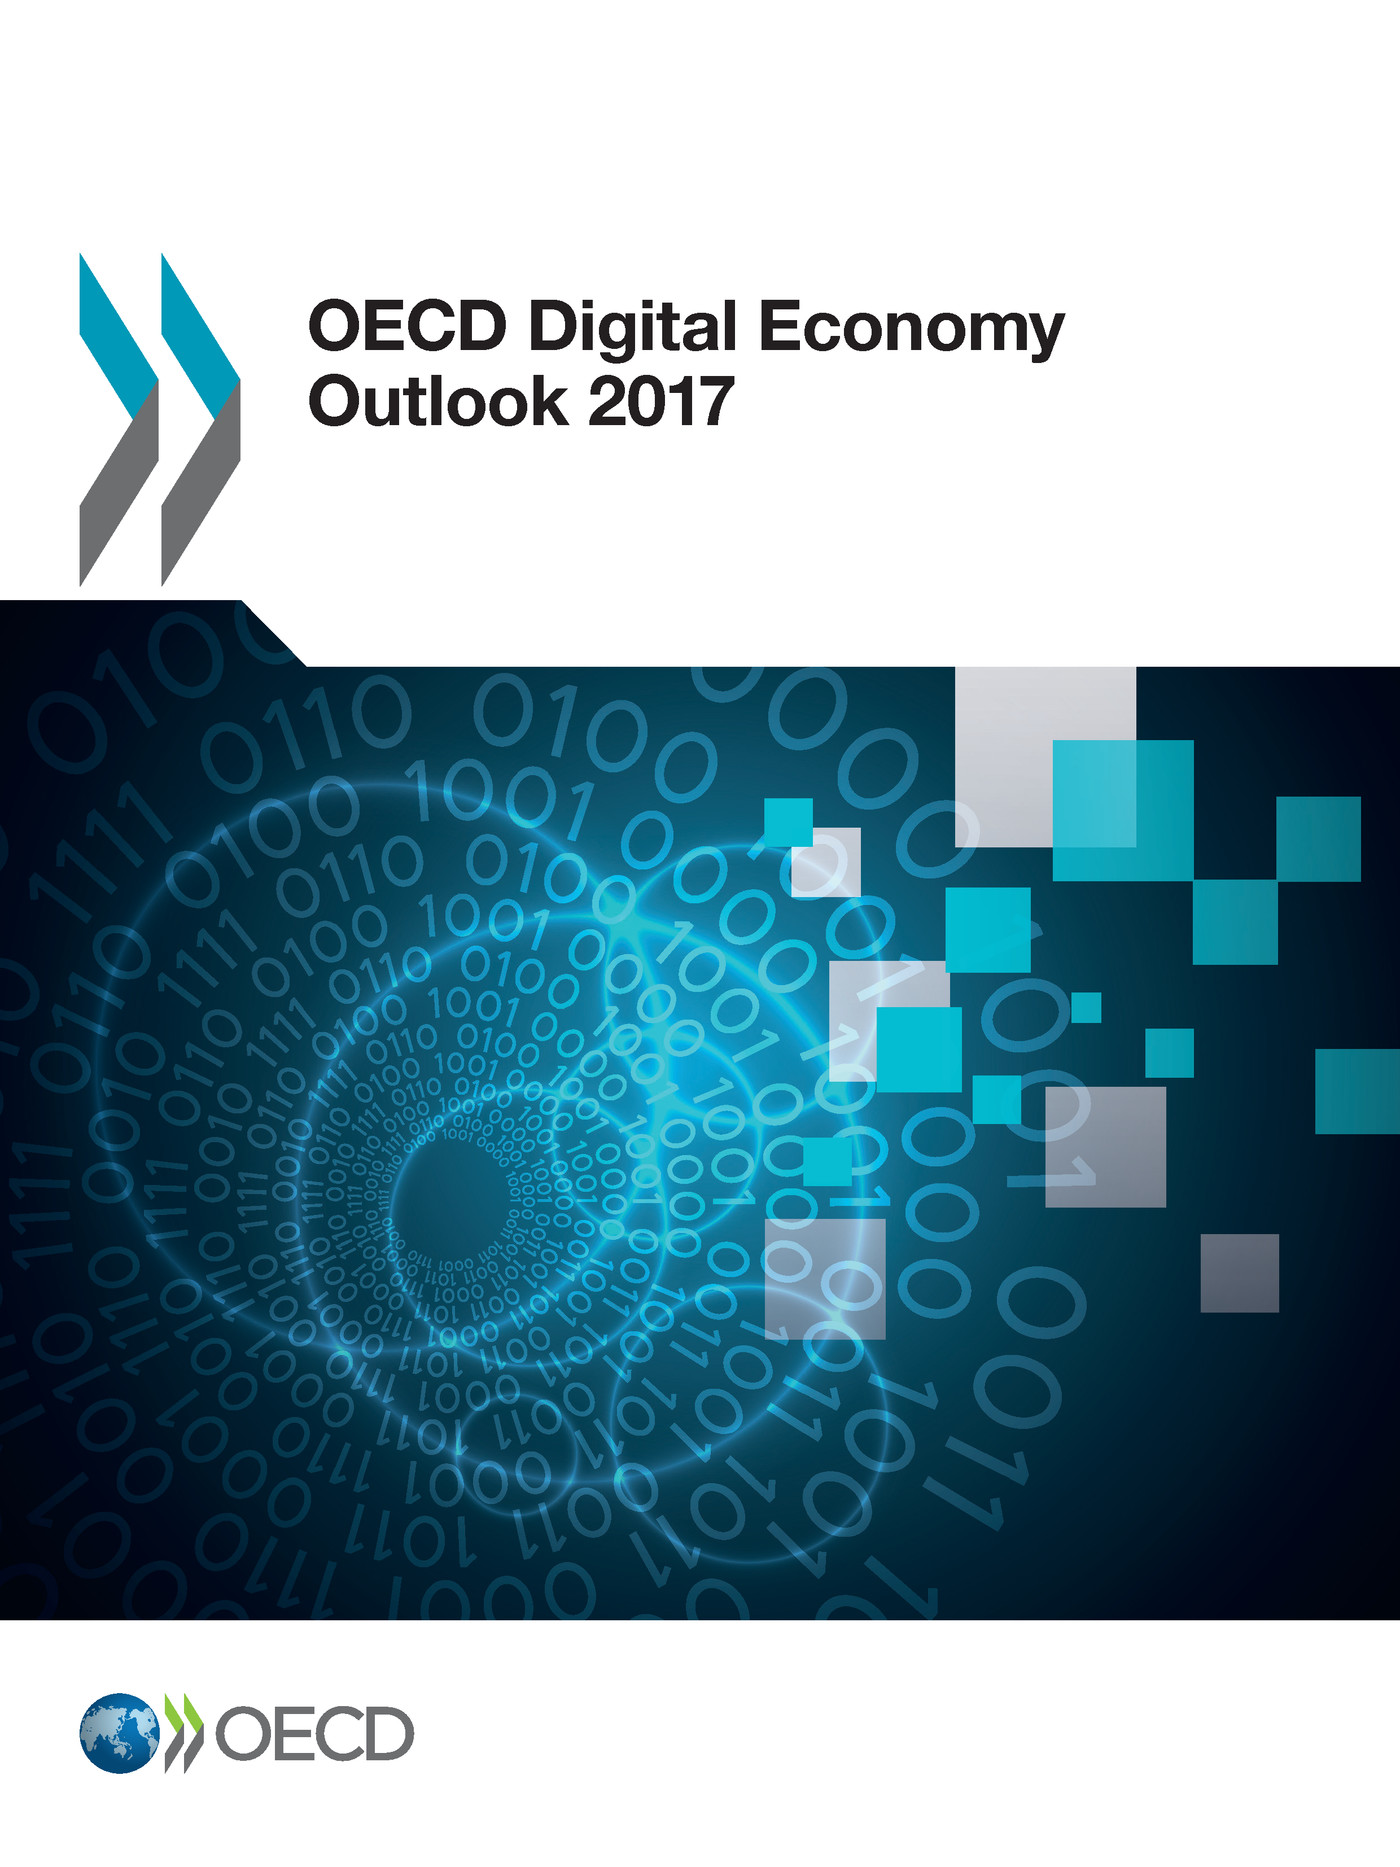 OECD Digital Economy Outlook 2017 -  Collectif - OCDE / OECD